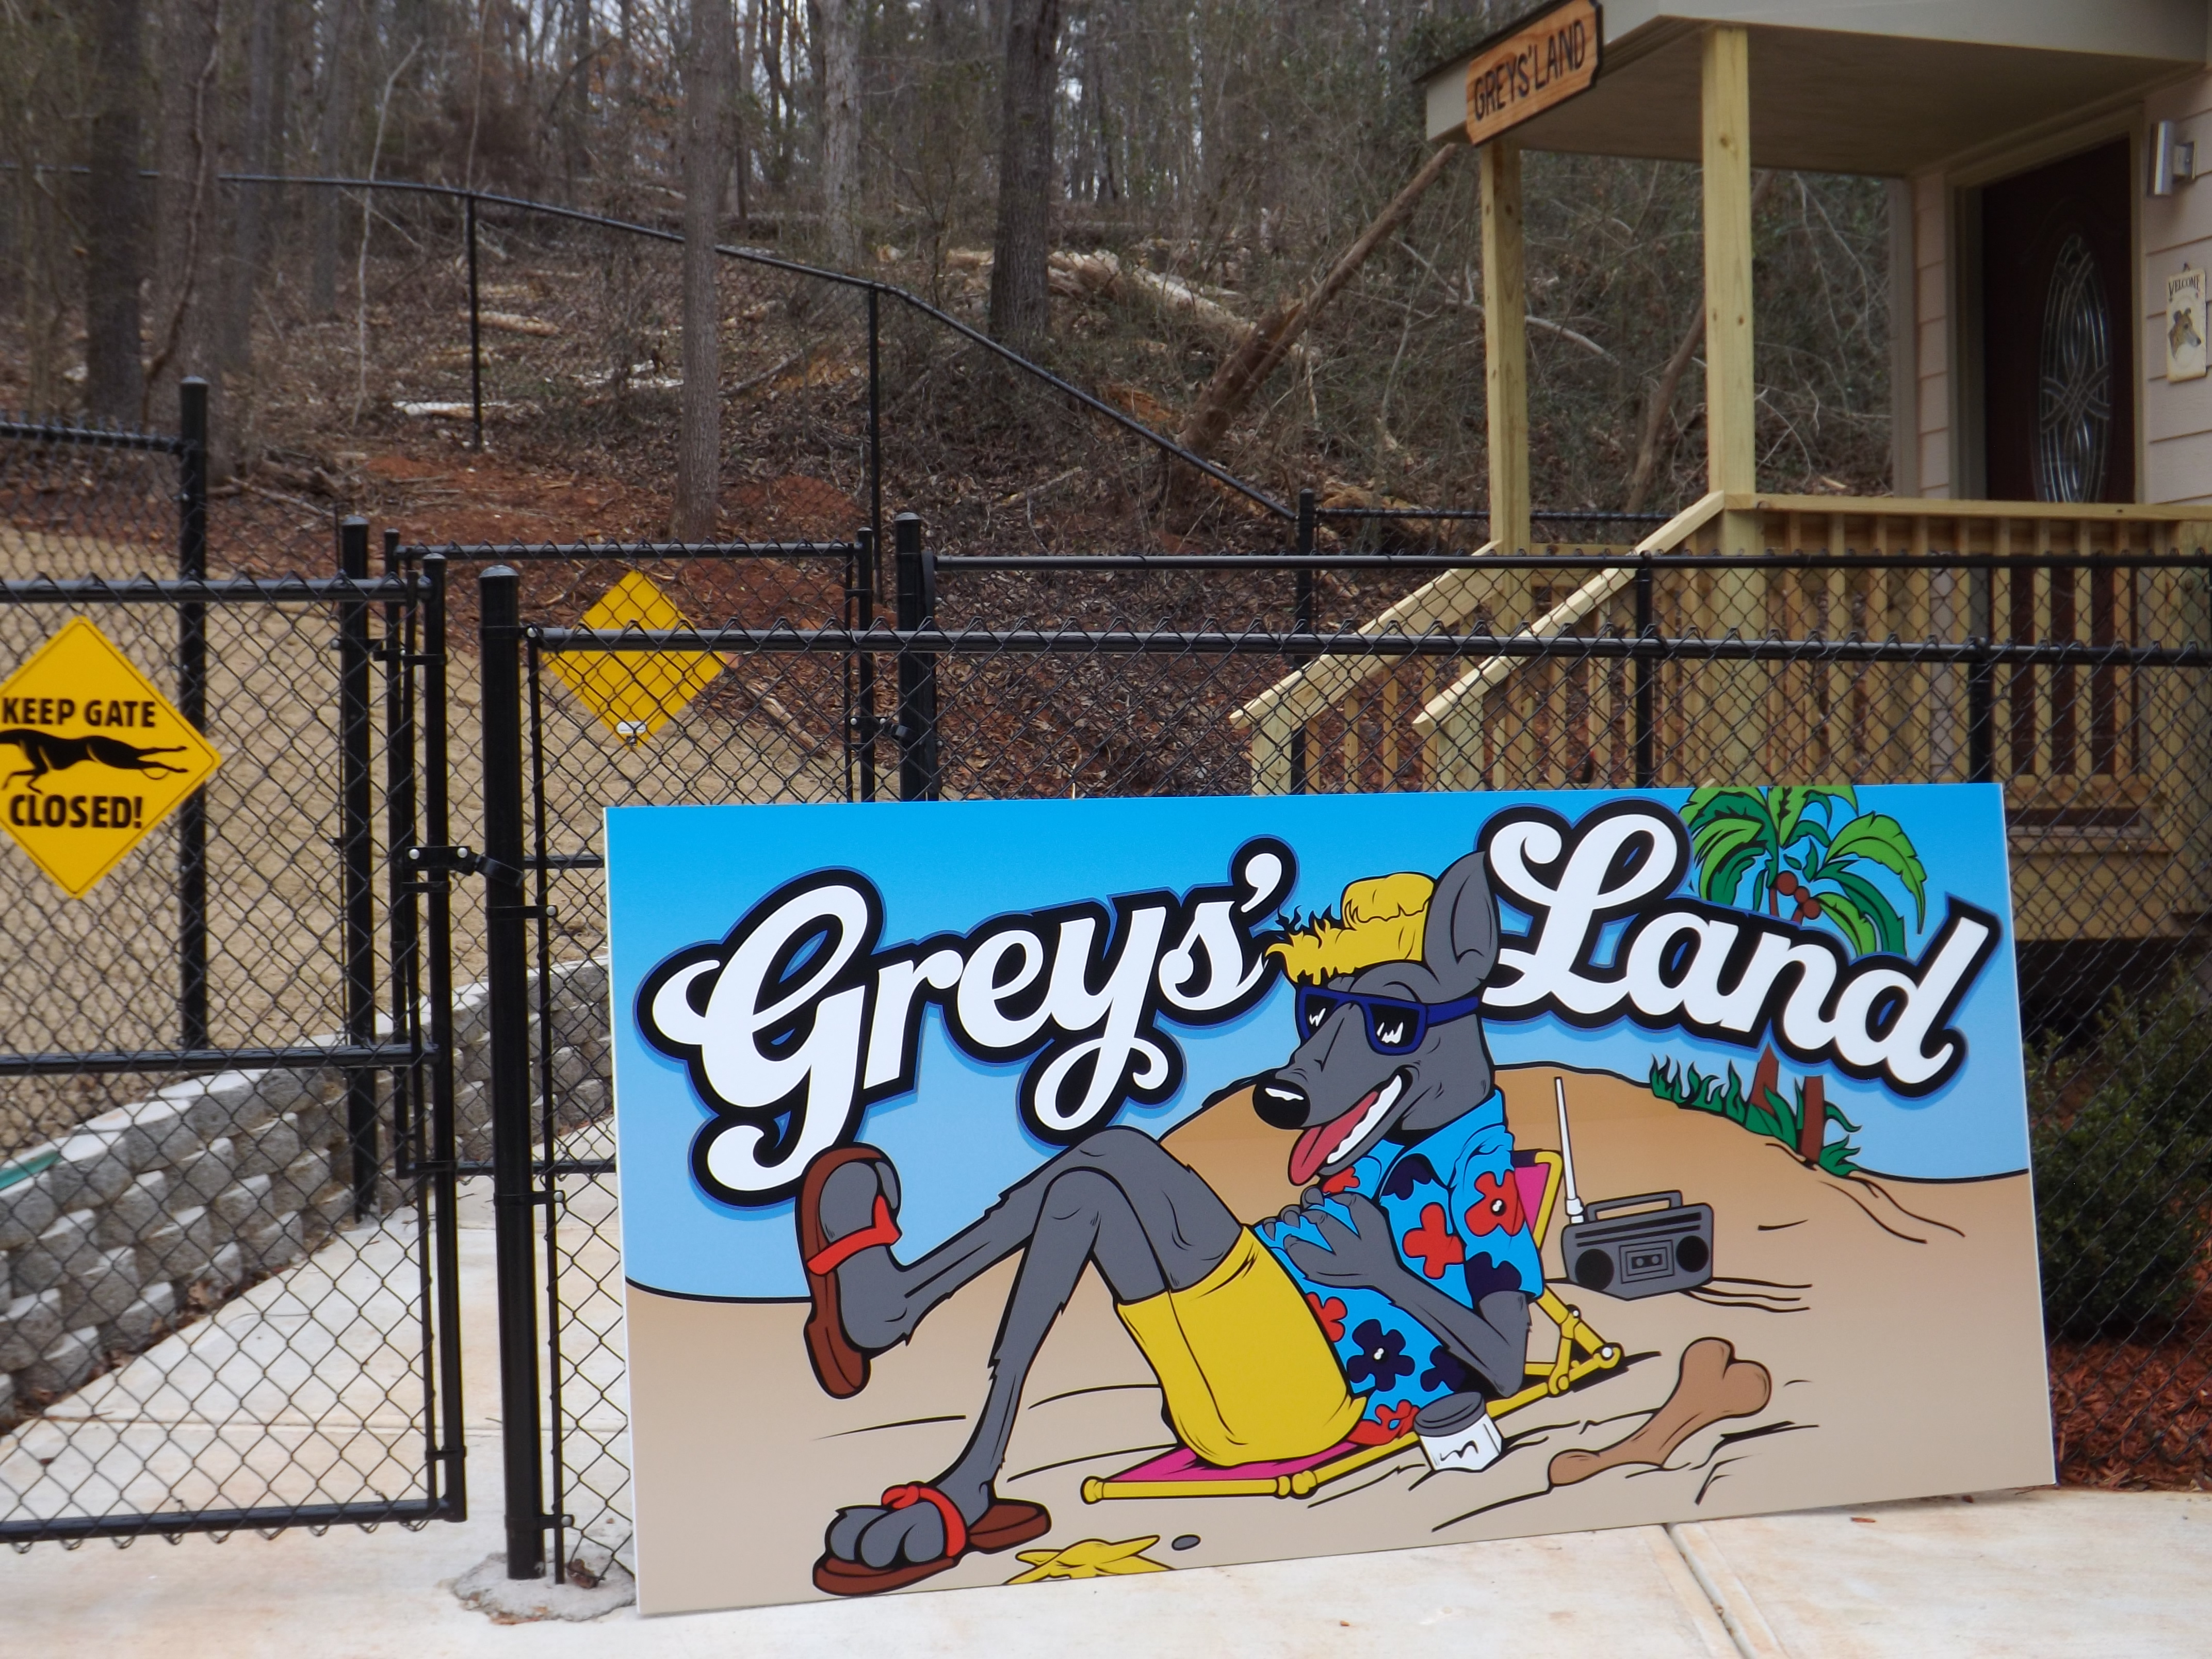 New Greys'Land sign